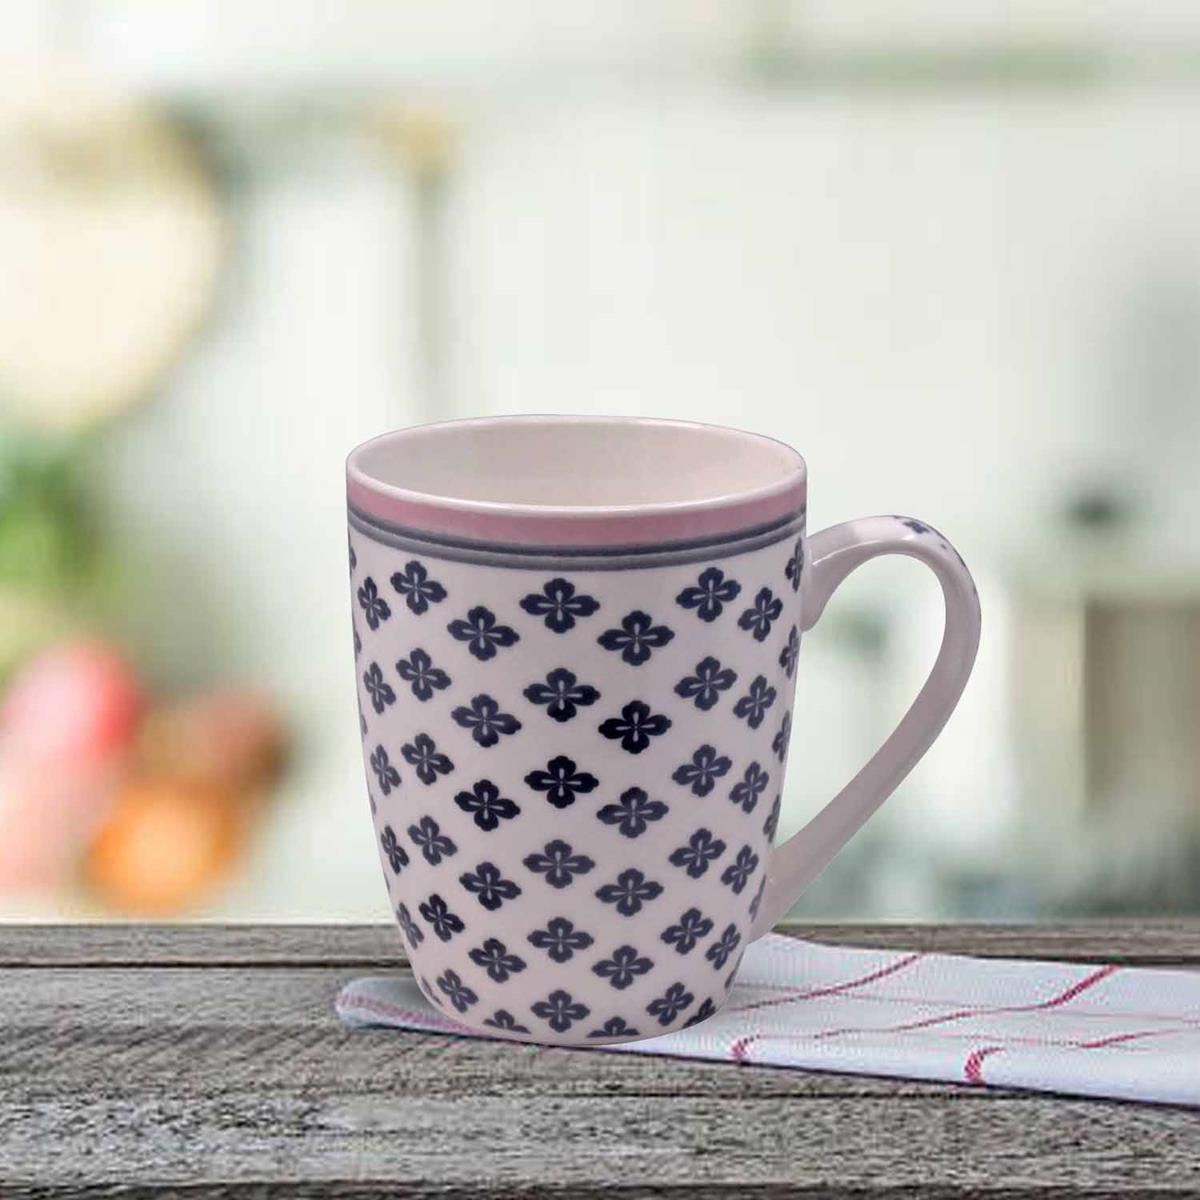 Kookee Printed Ceramic Coffee or Tea Mug with handle for Office, Home or Gifting - 325ml (4124-A)